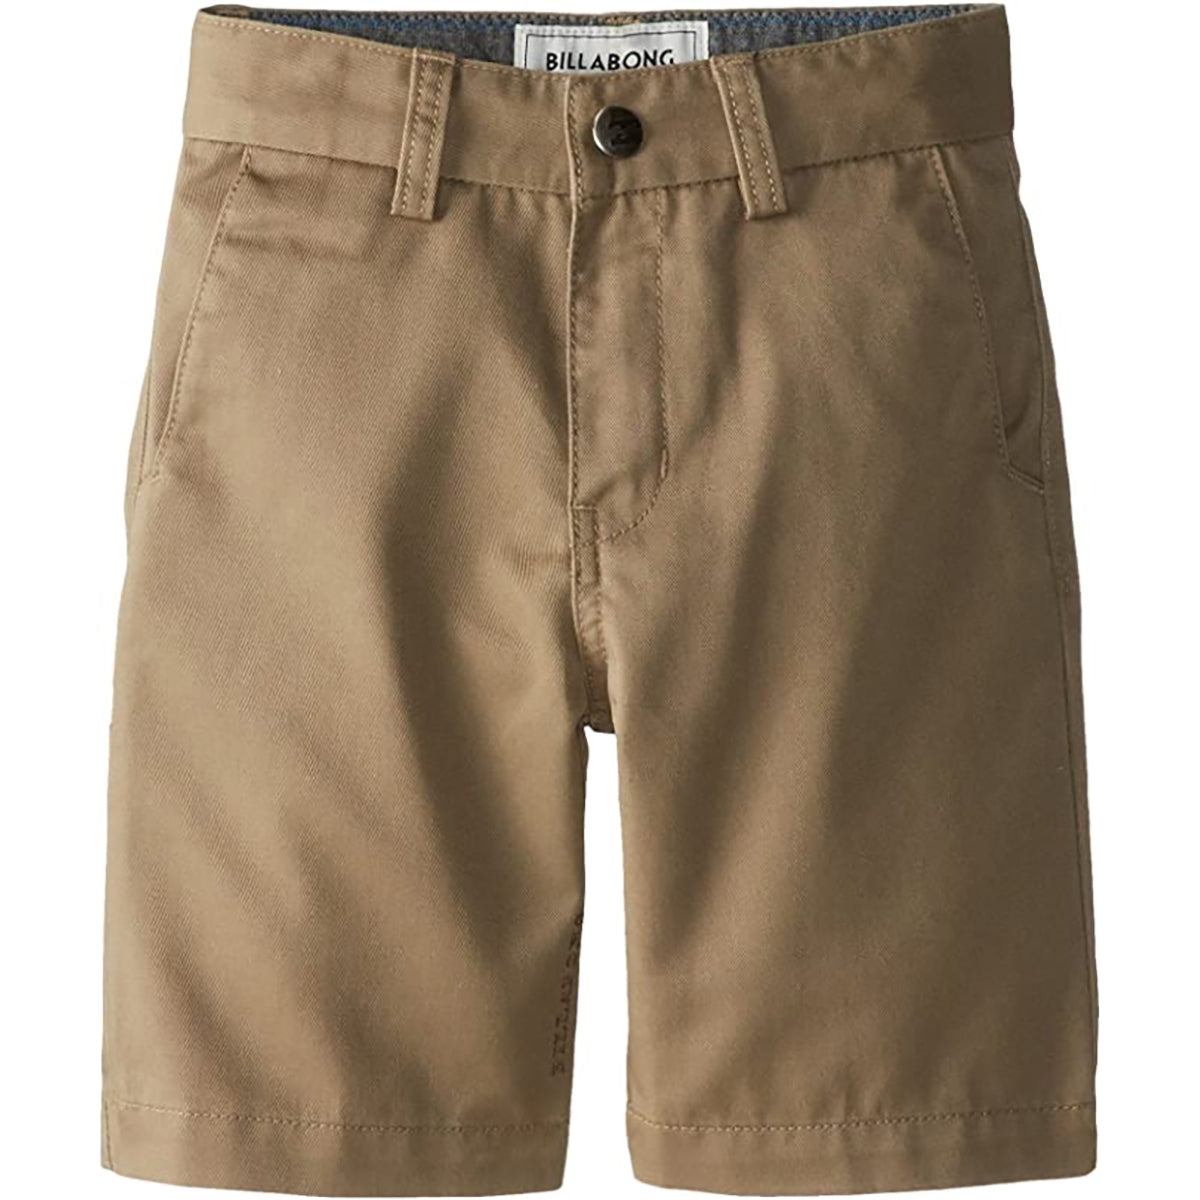 Billabong Carter Youth Boys Walkshort Shorts (Brand New